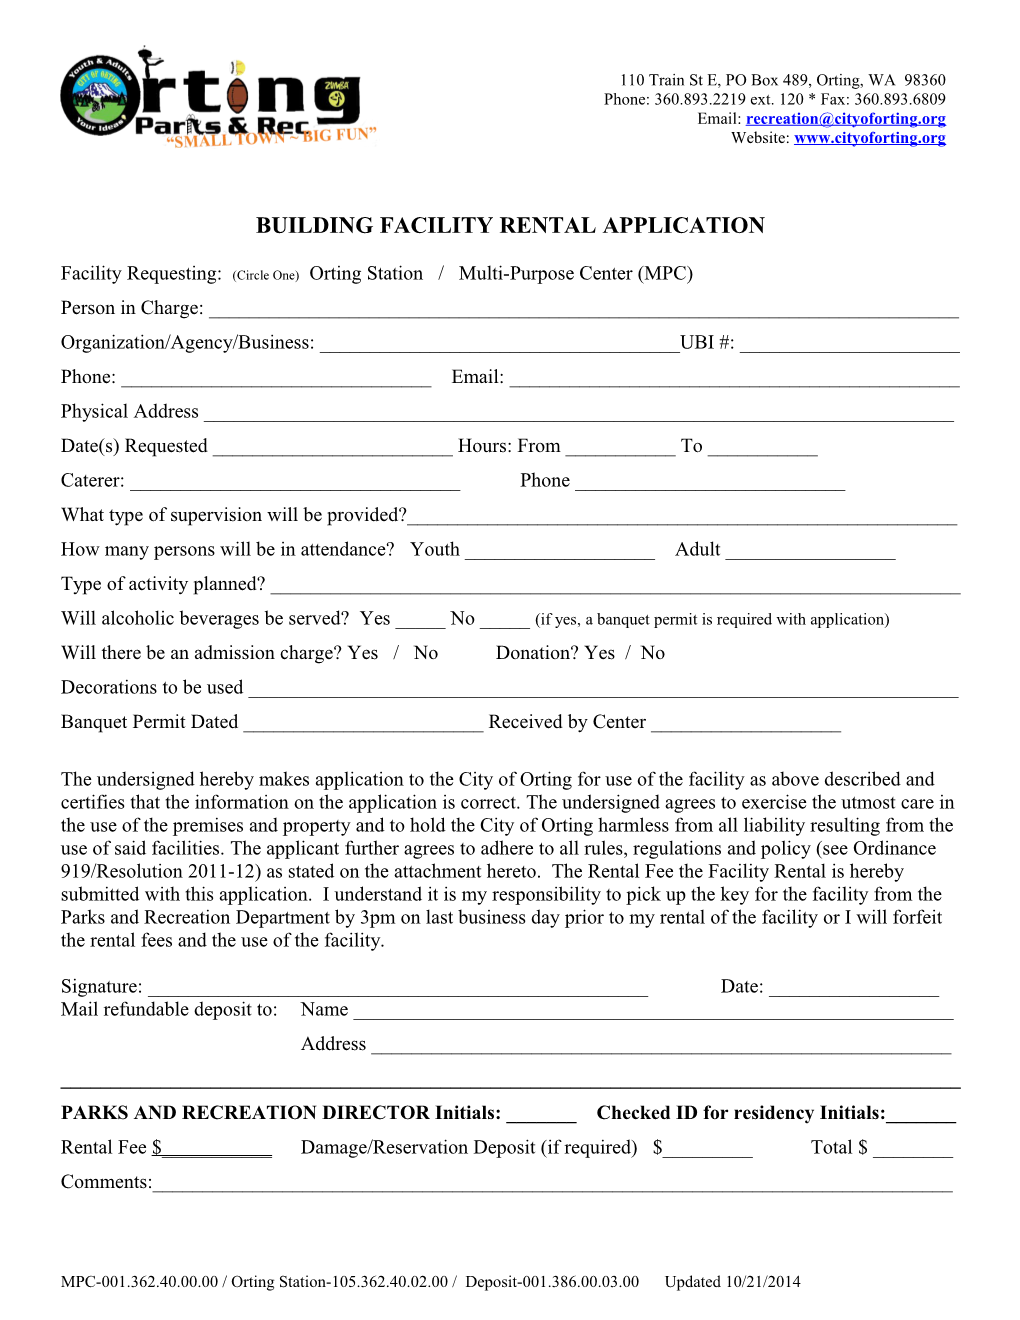 Building Facility Rental Application